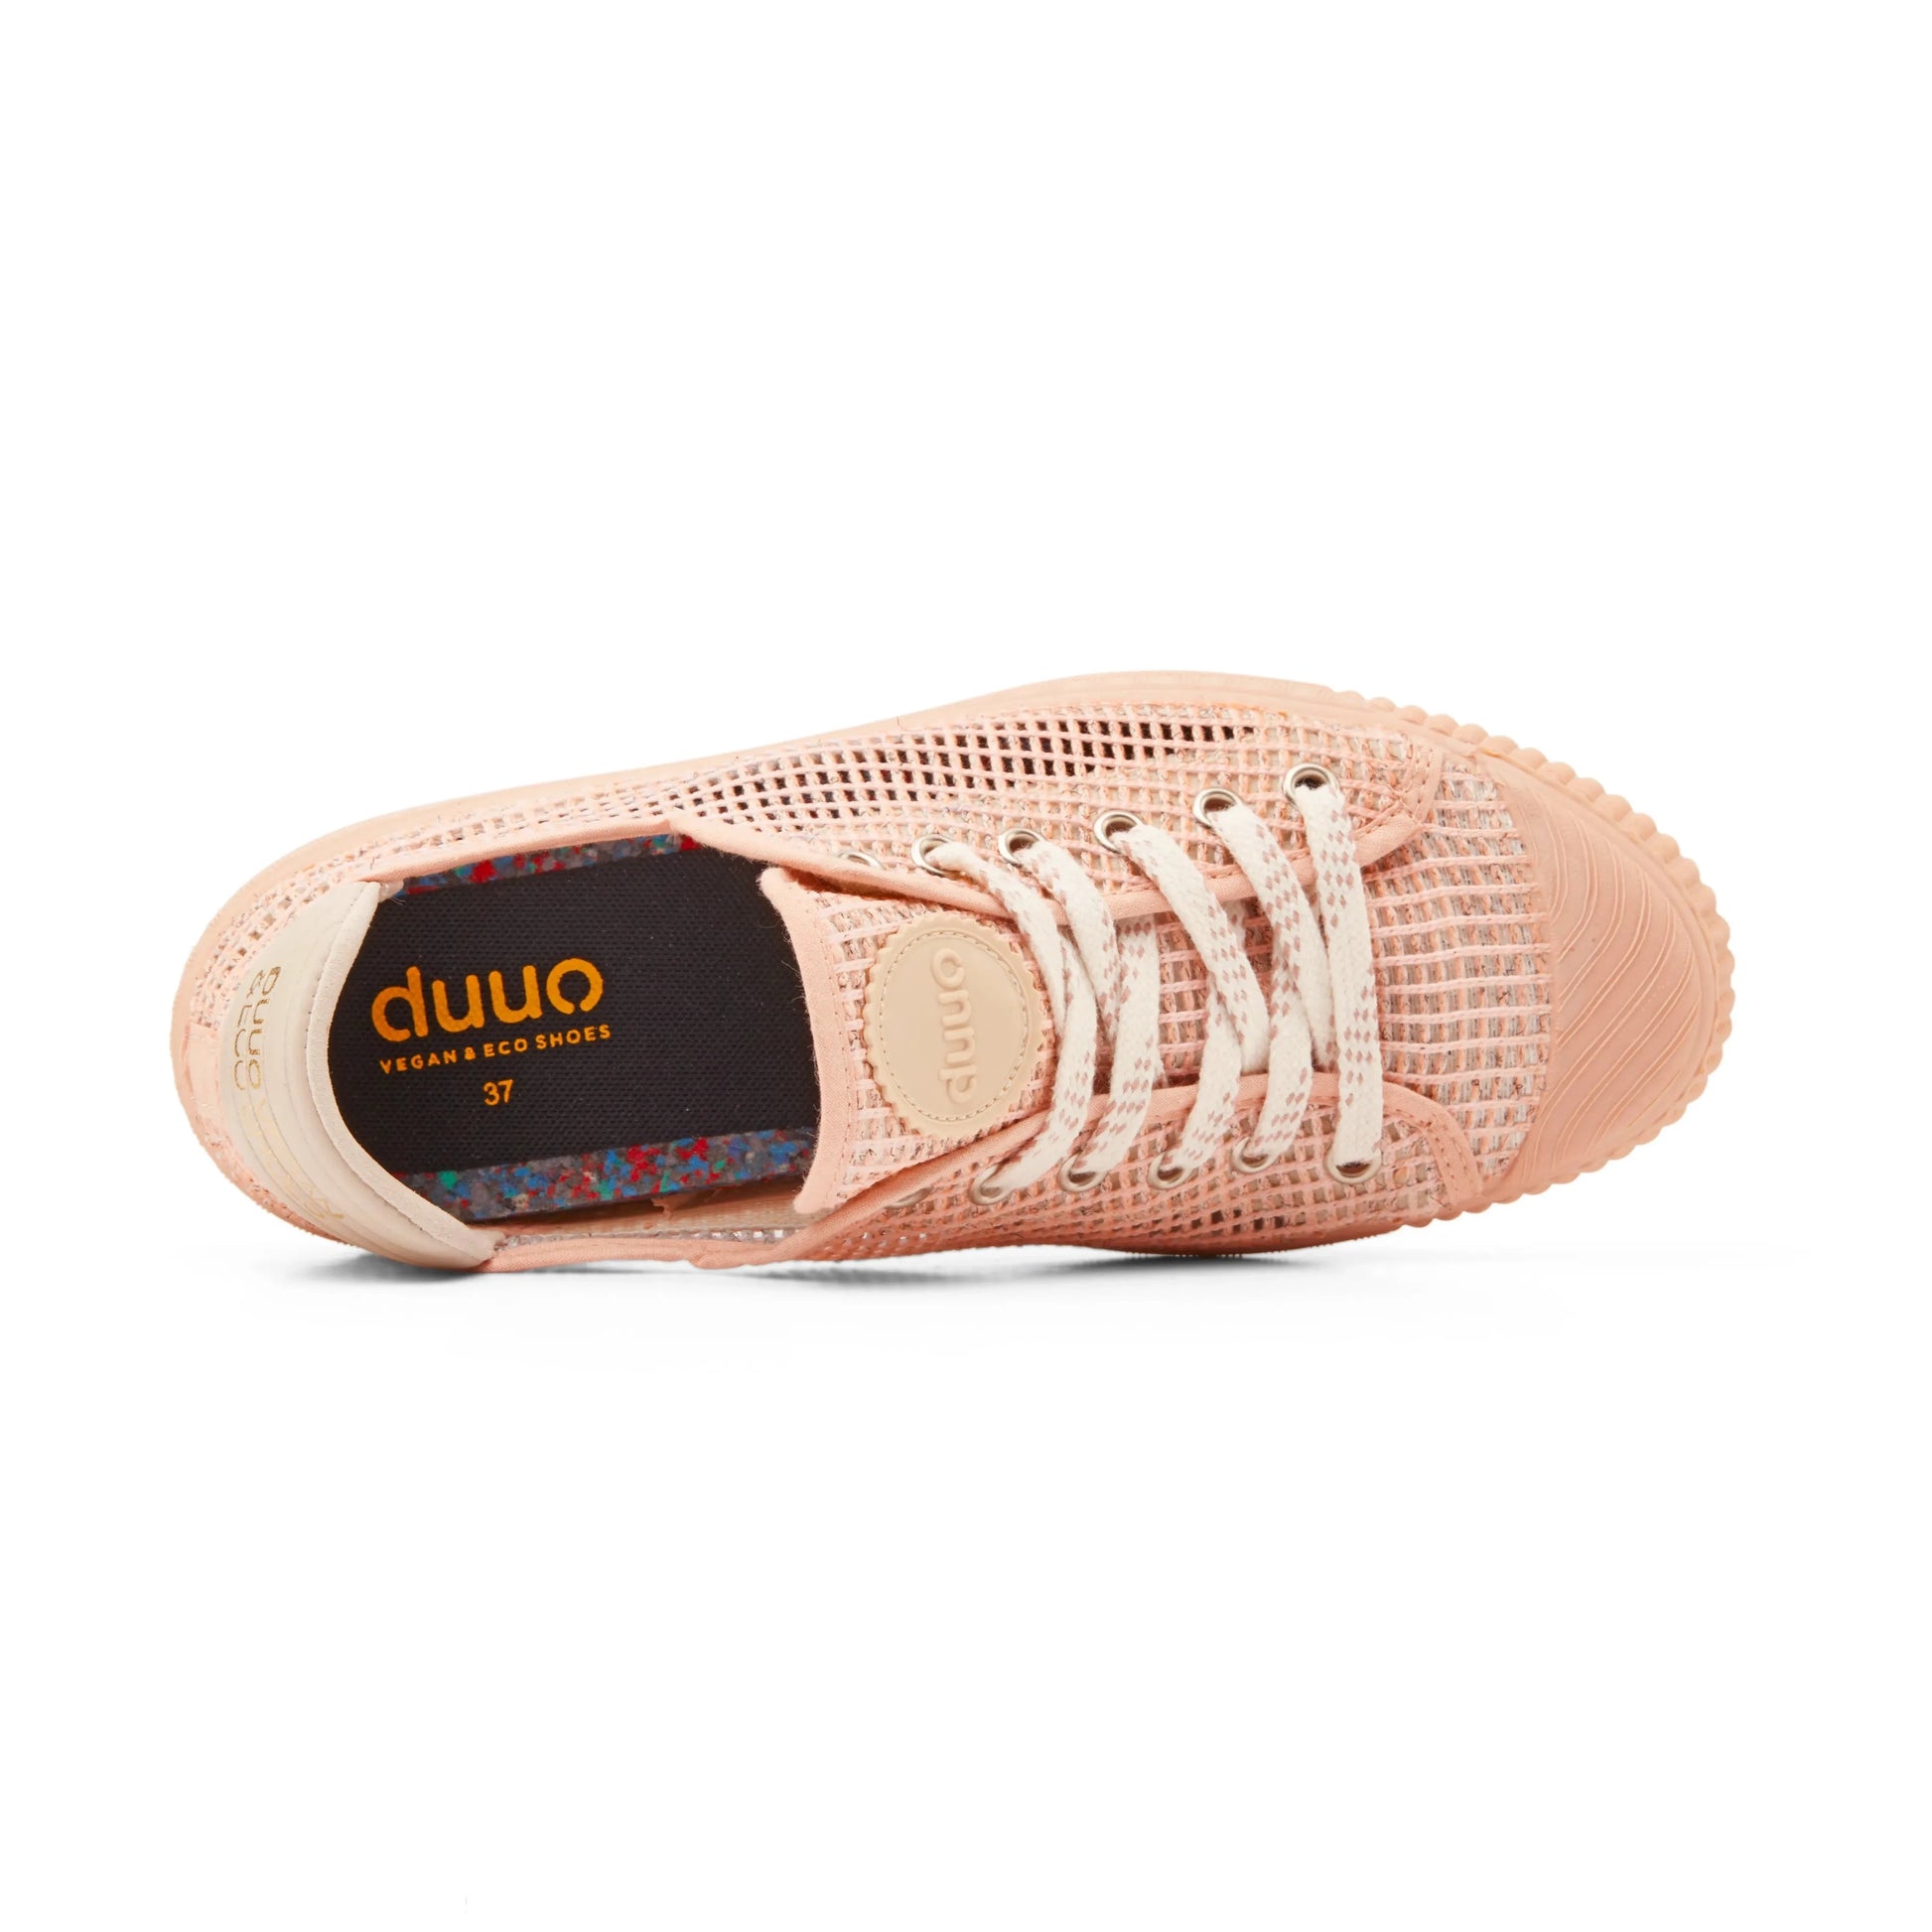 DUUO SHOP  Vegan & Eco Shoes